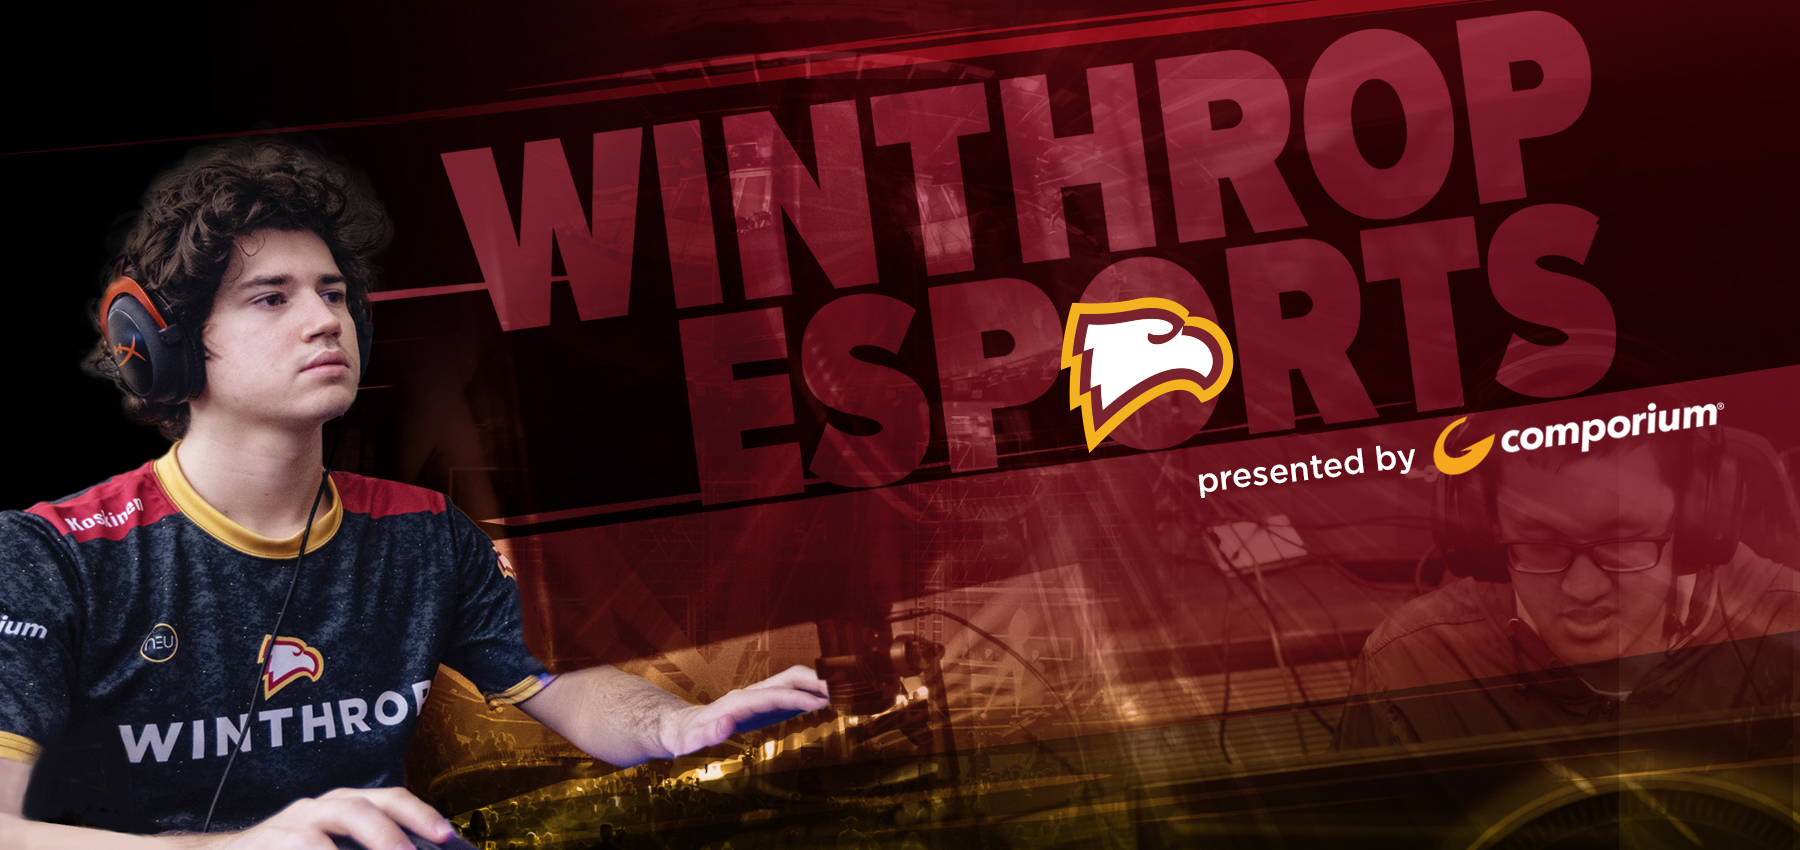 Winthrop Esports